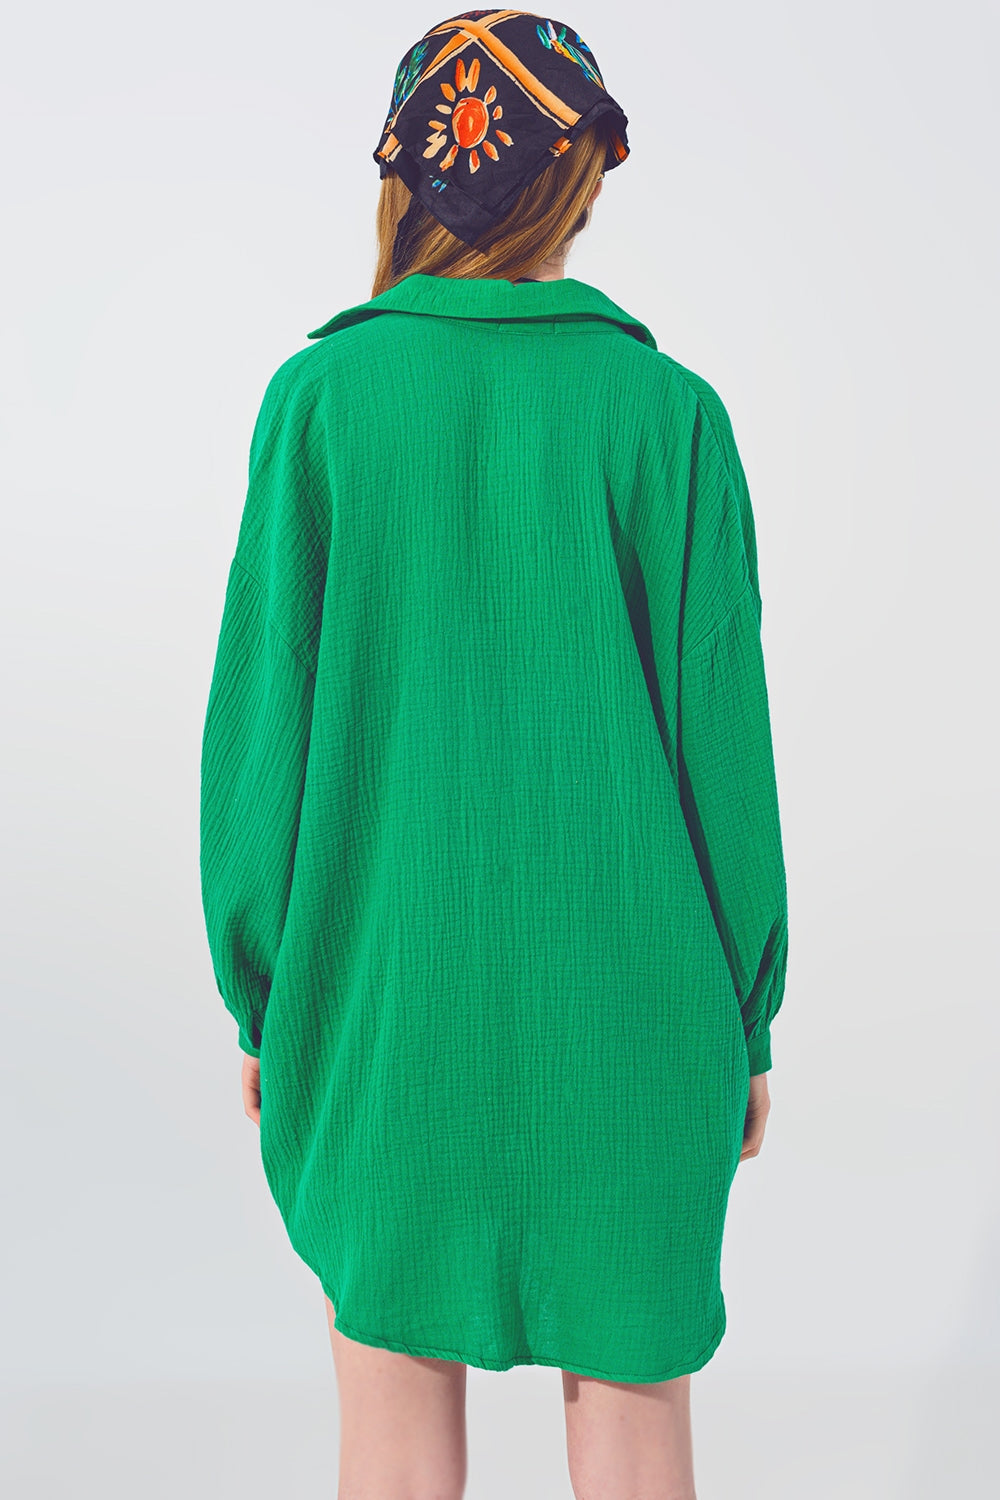 Textured Loose Fit Shirt in Green - Szua Store